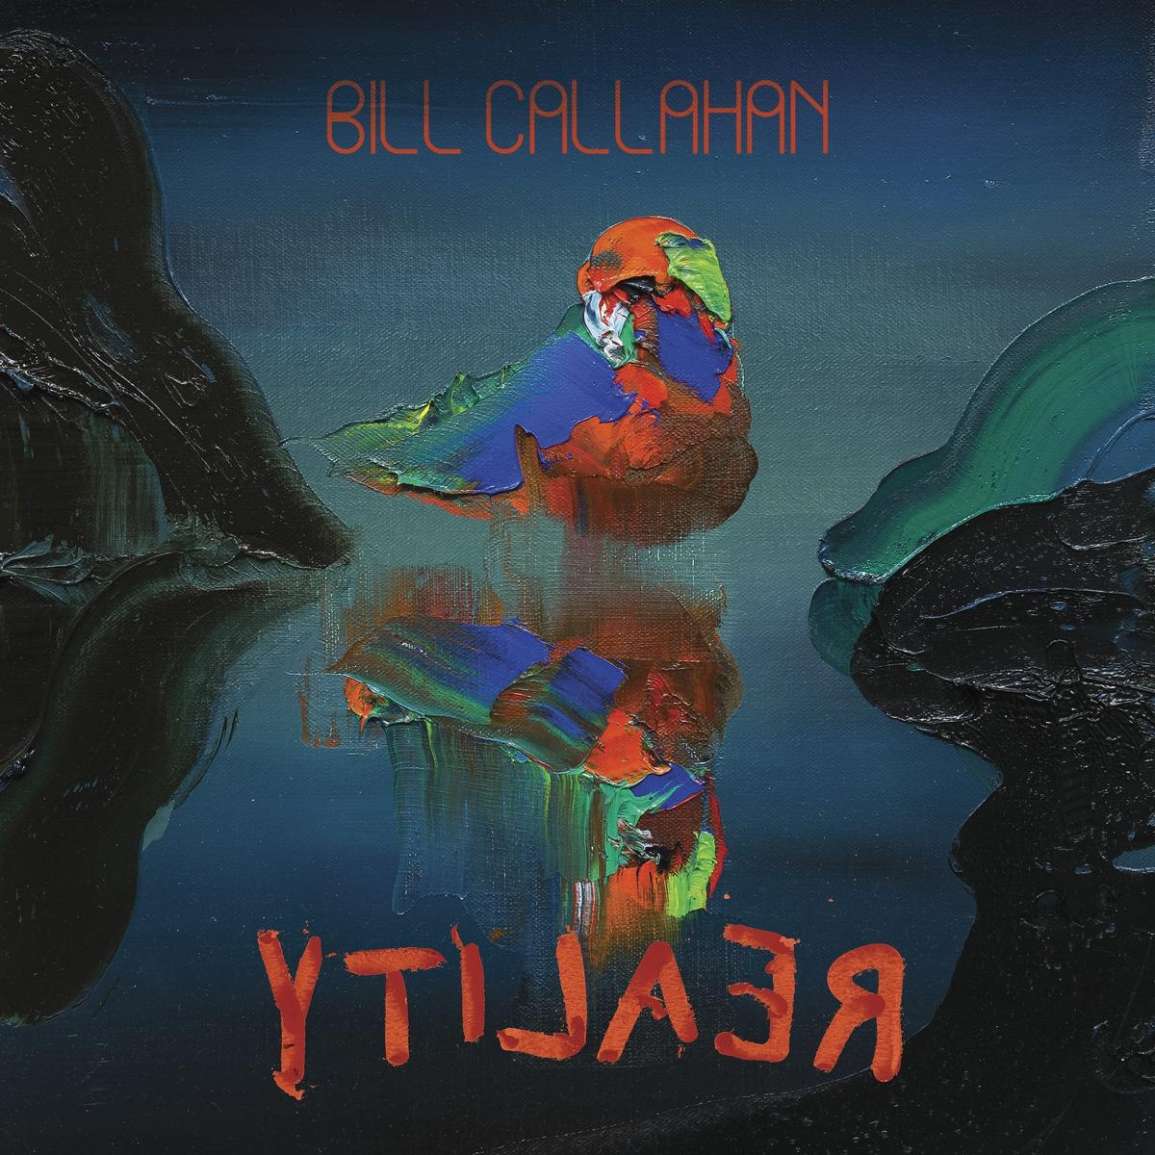 Bill Callahan: Ytilaer / Reality